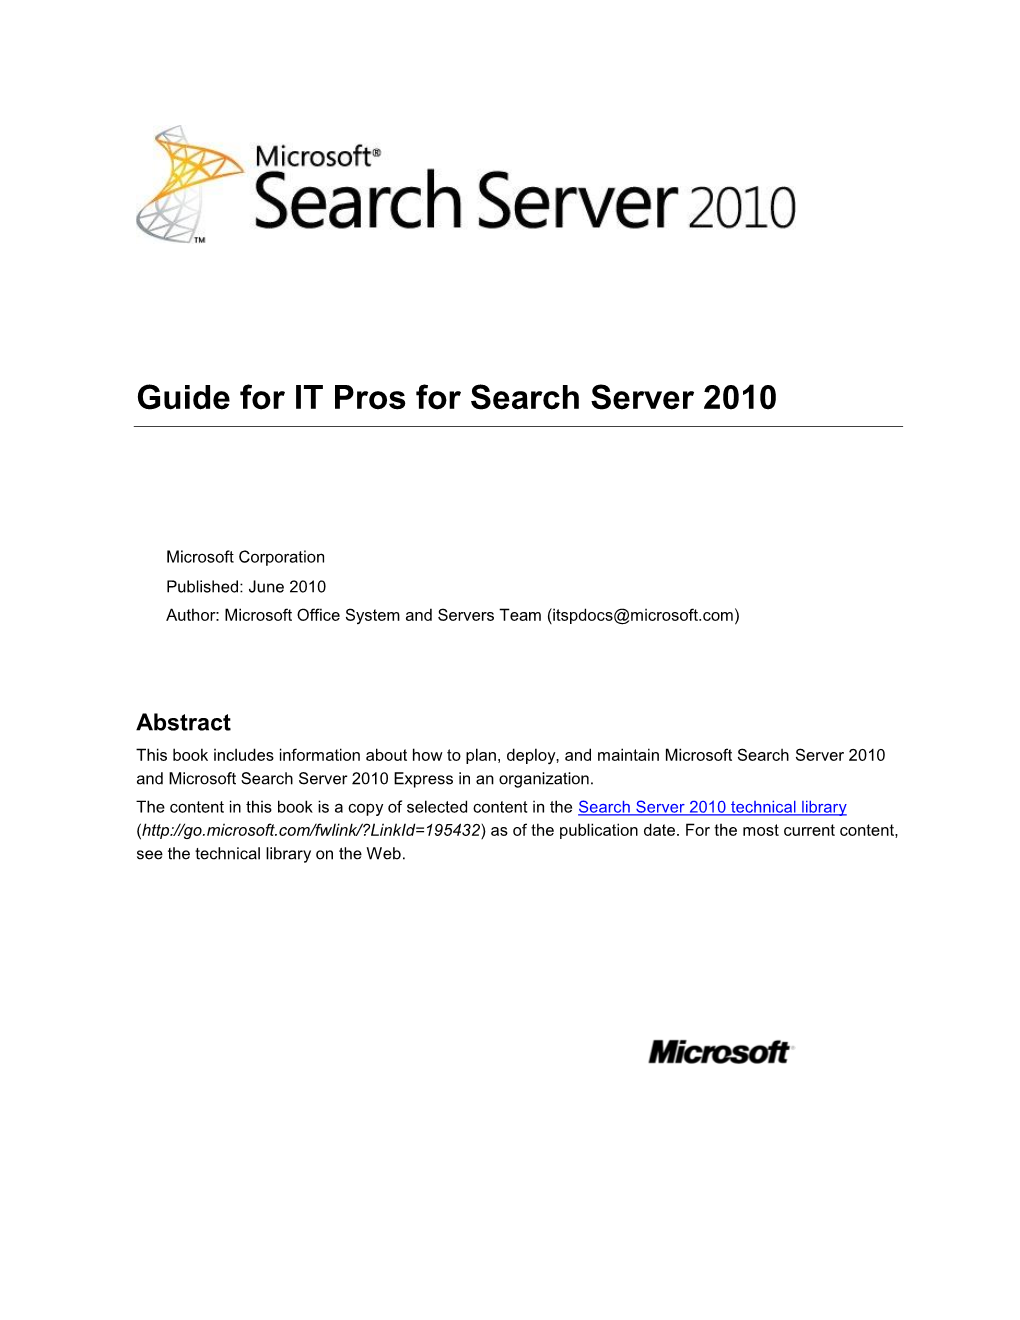 Search Server 2010